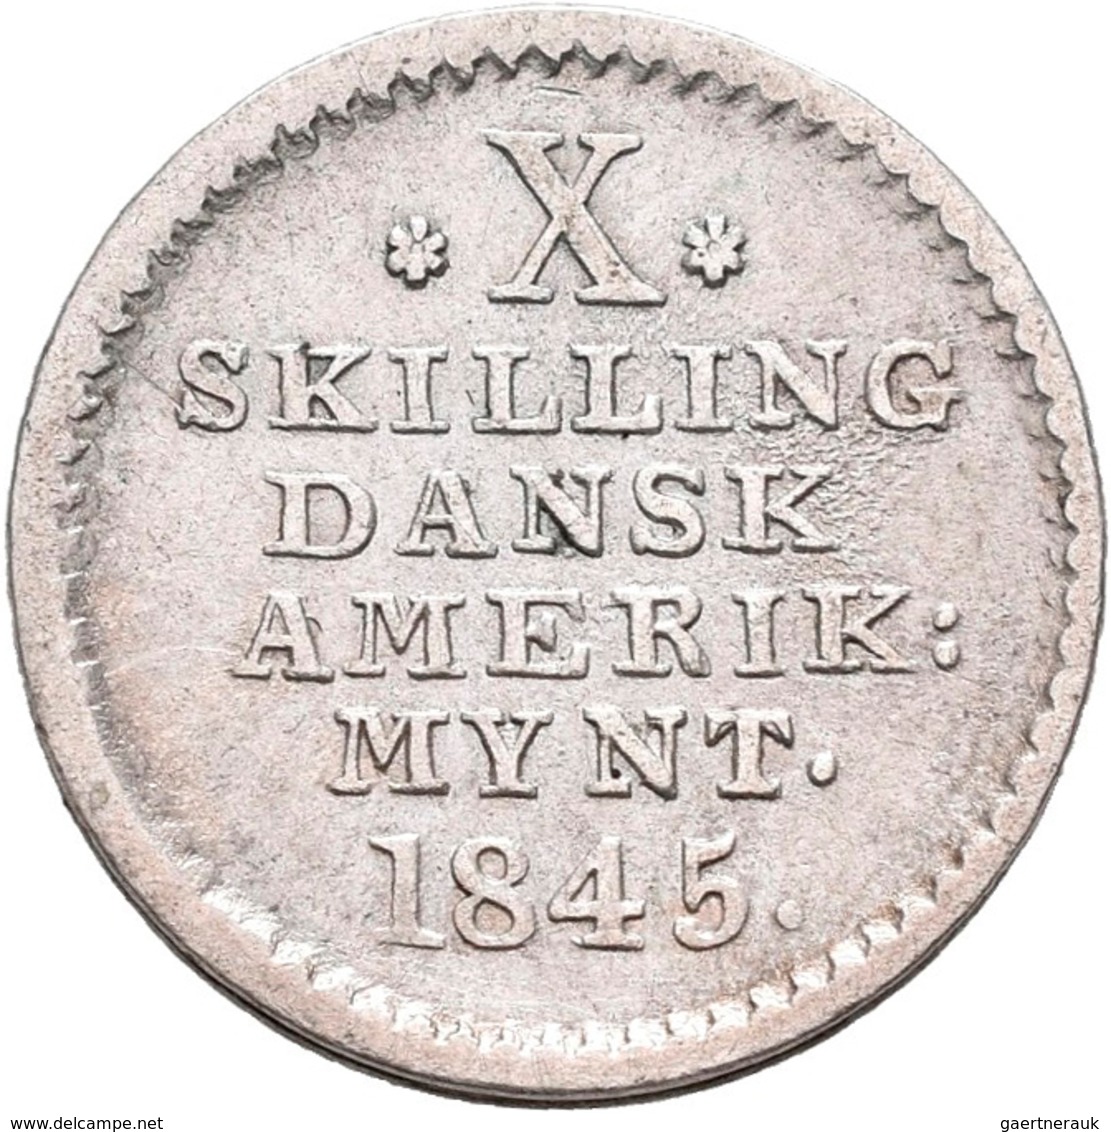 Dänisch-Westindien: (seit 1917 U.S. Virgin Islands) Christian VIII. 1839-1848: 10 Skilling 1845. KM# - Antillas